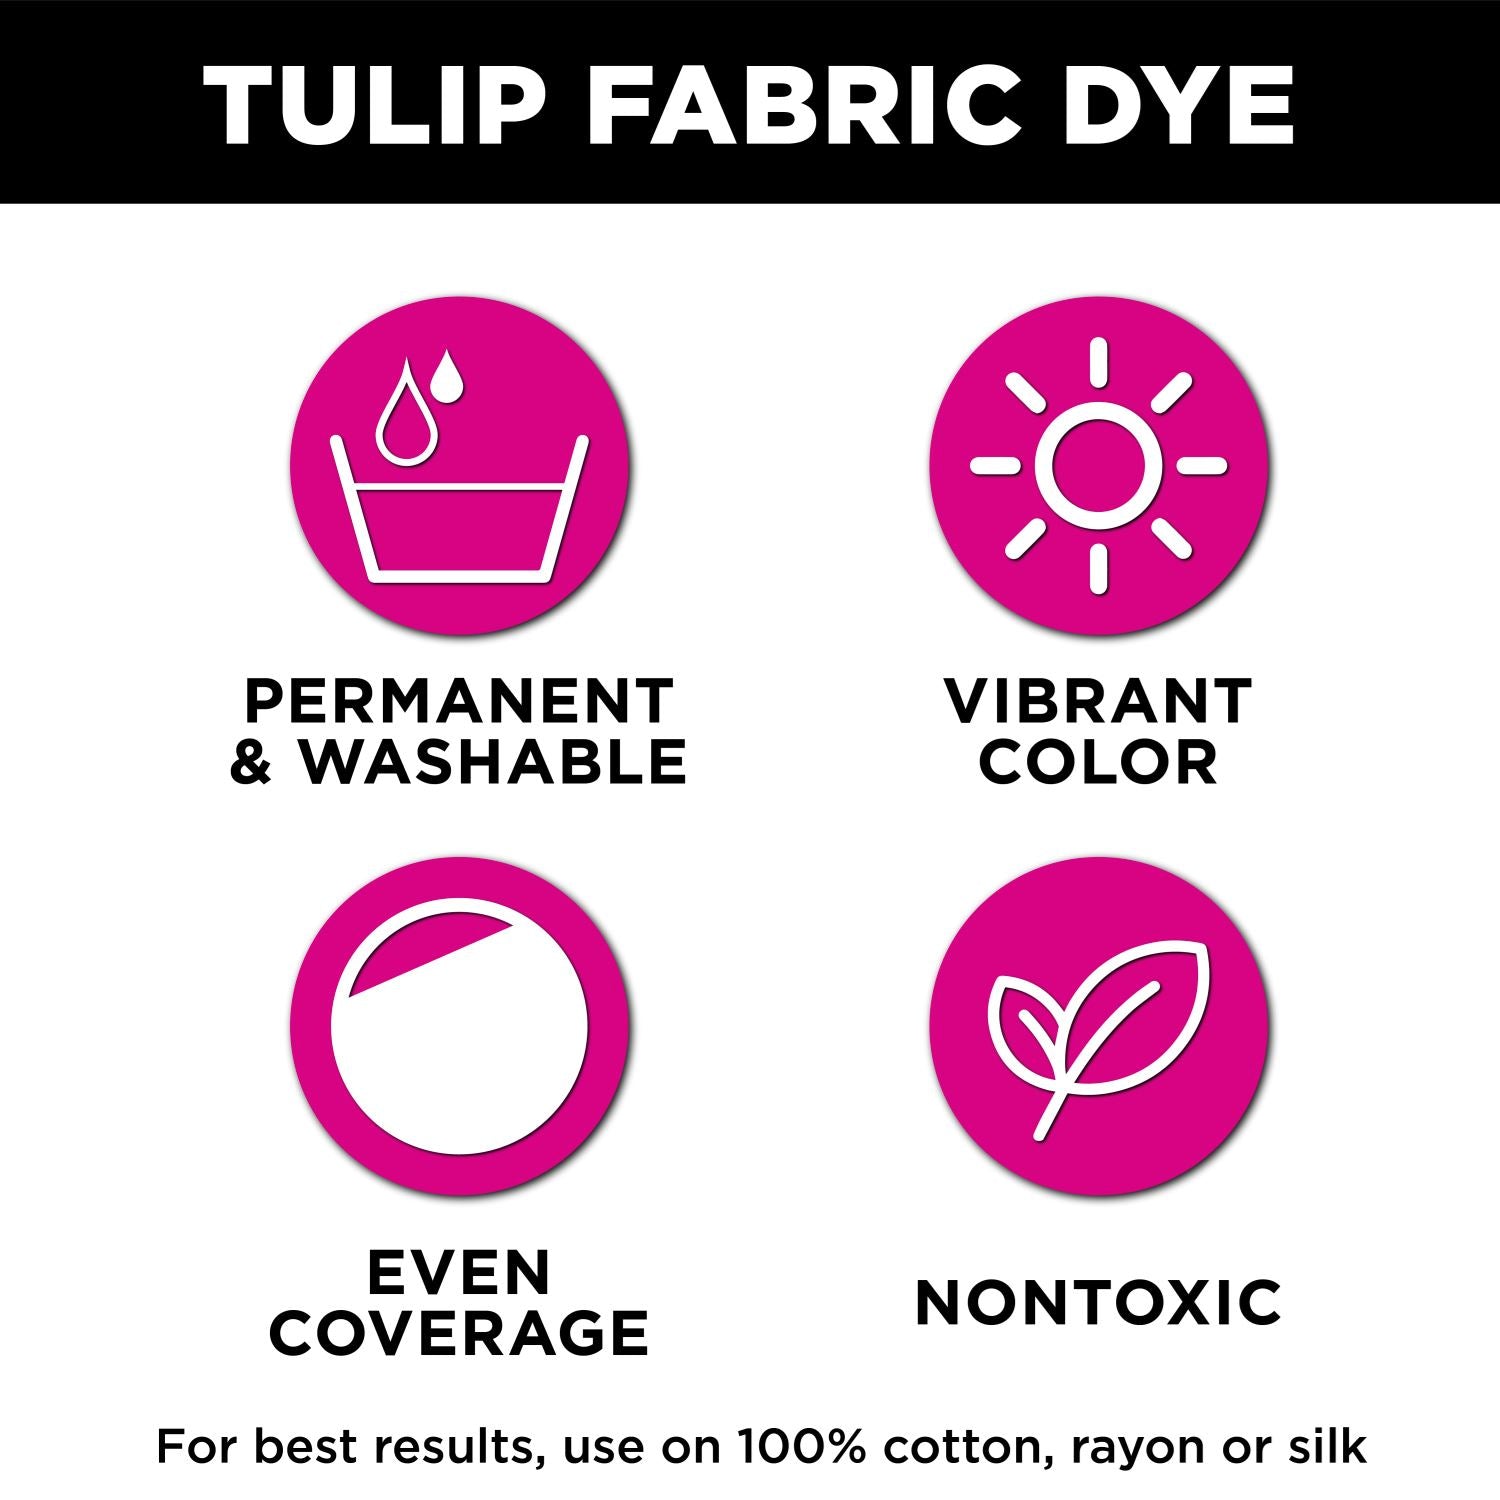 Tulip Permanent Fabric Dye, Turquoise, 1.76 oz, Permanent & Non-Toxic 